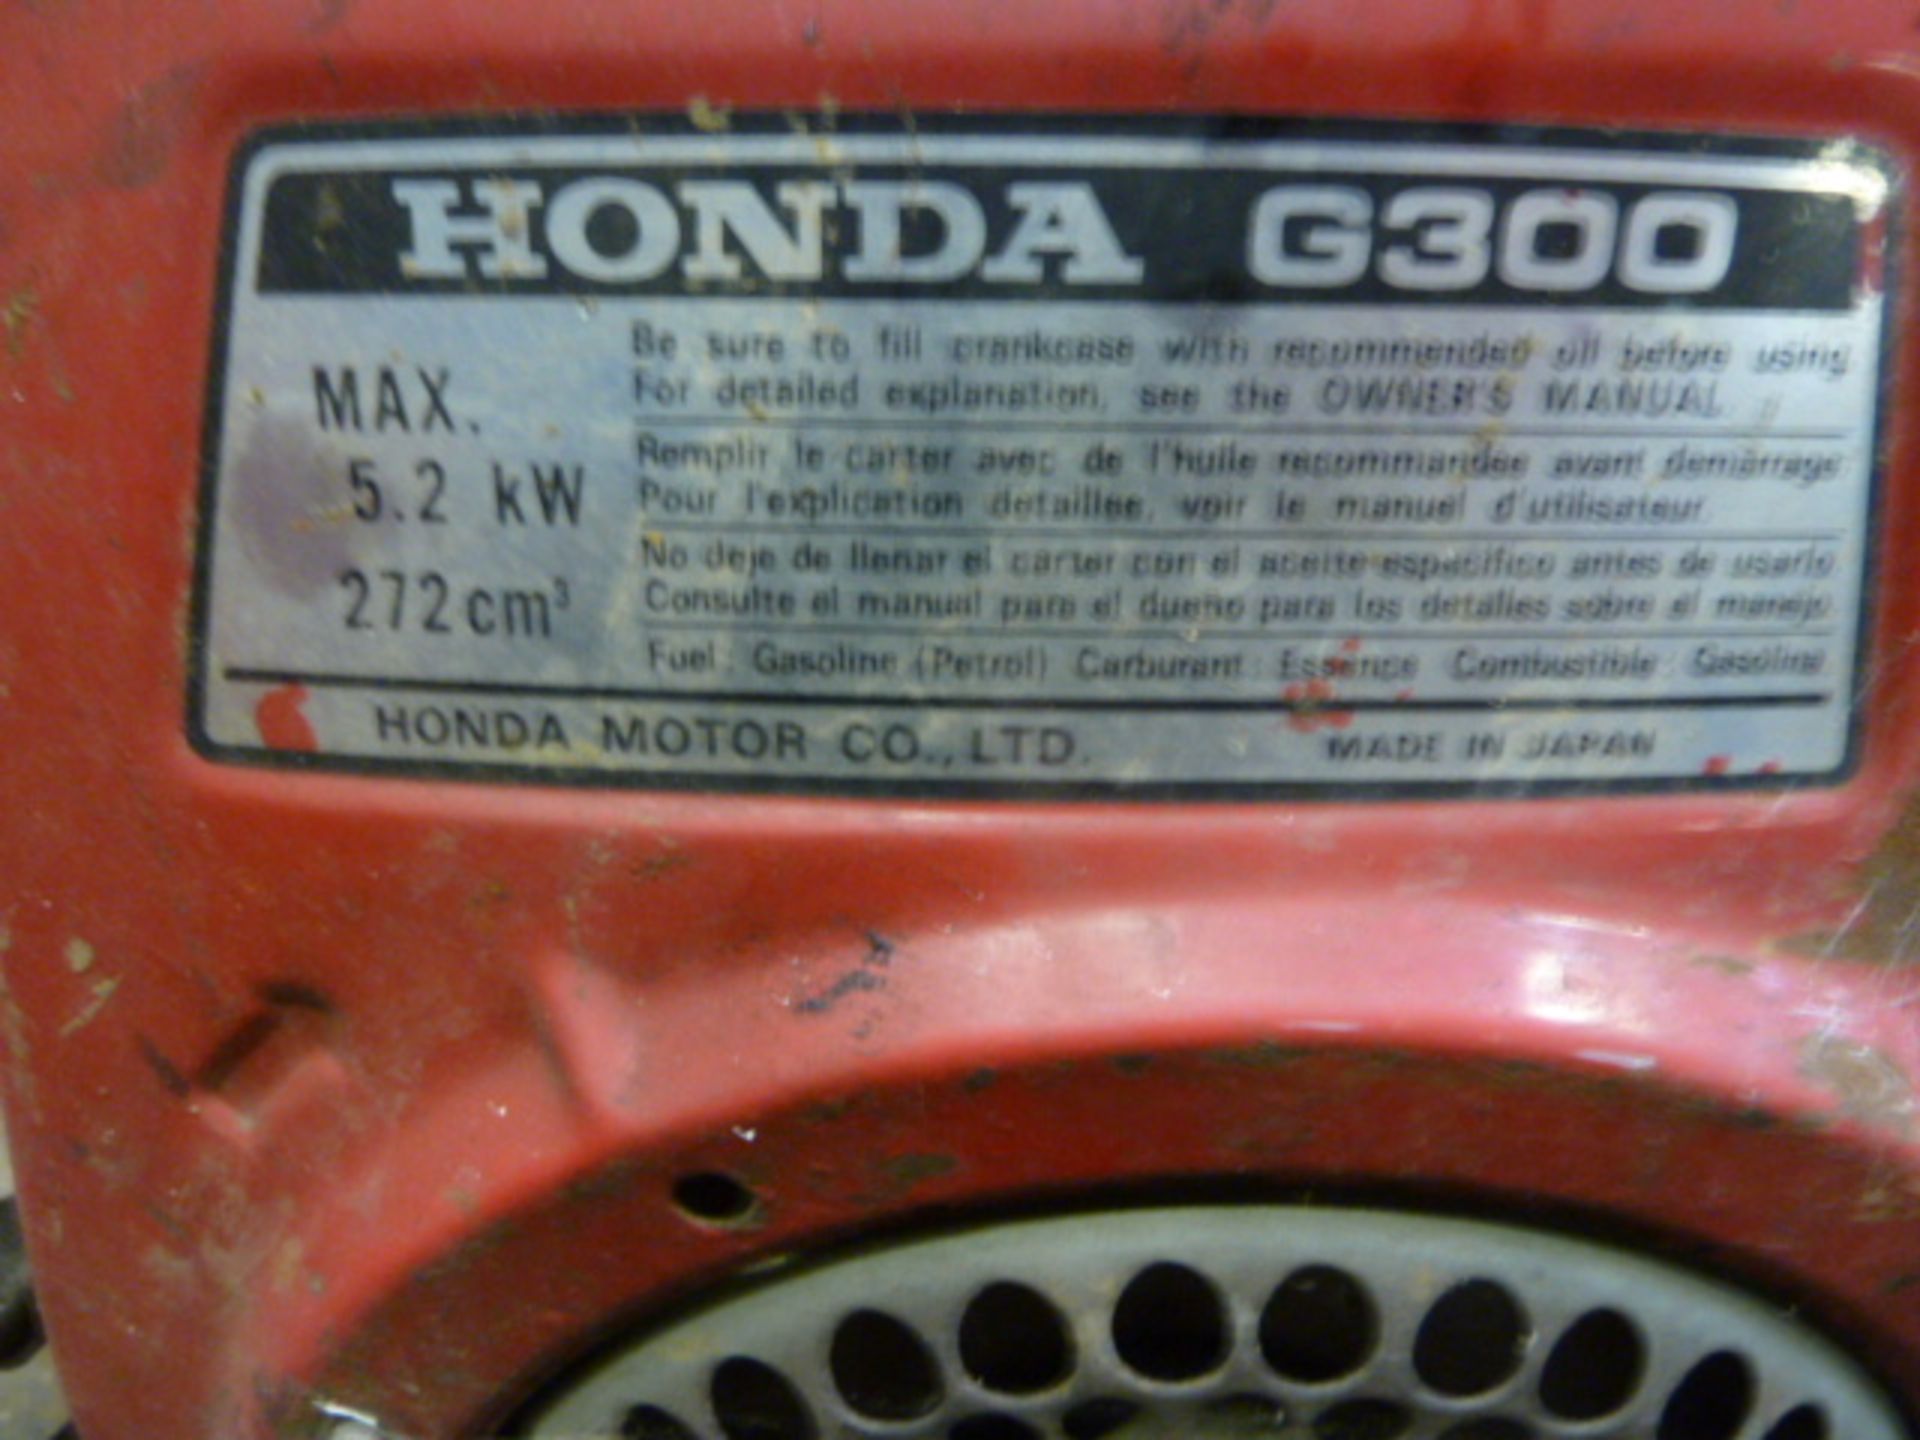 Honda G300 engine (spares of repairs) - Image 3 of 3